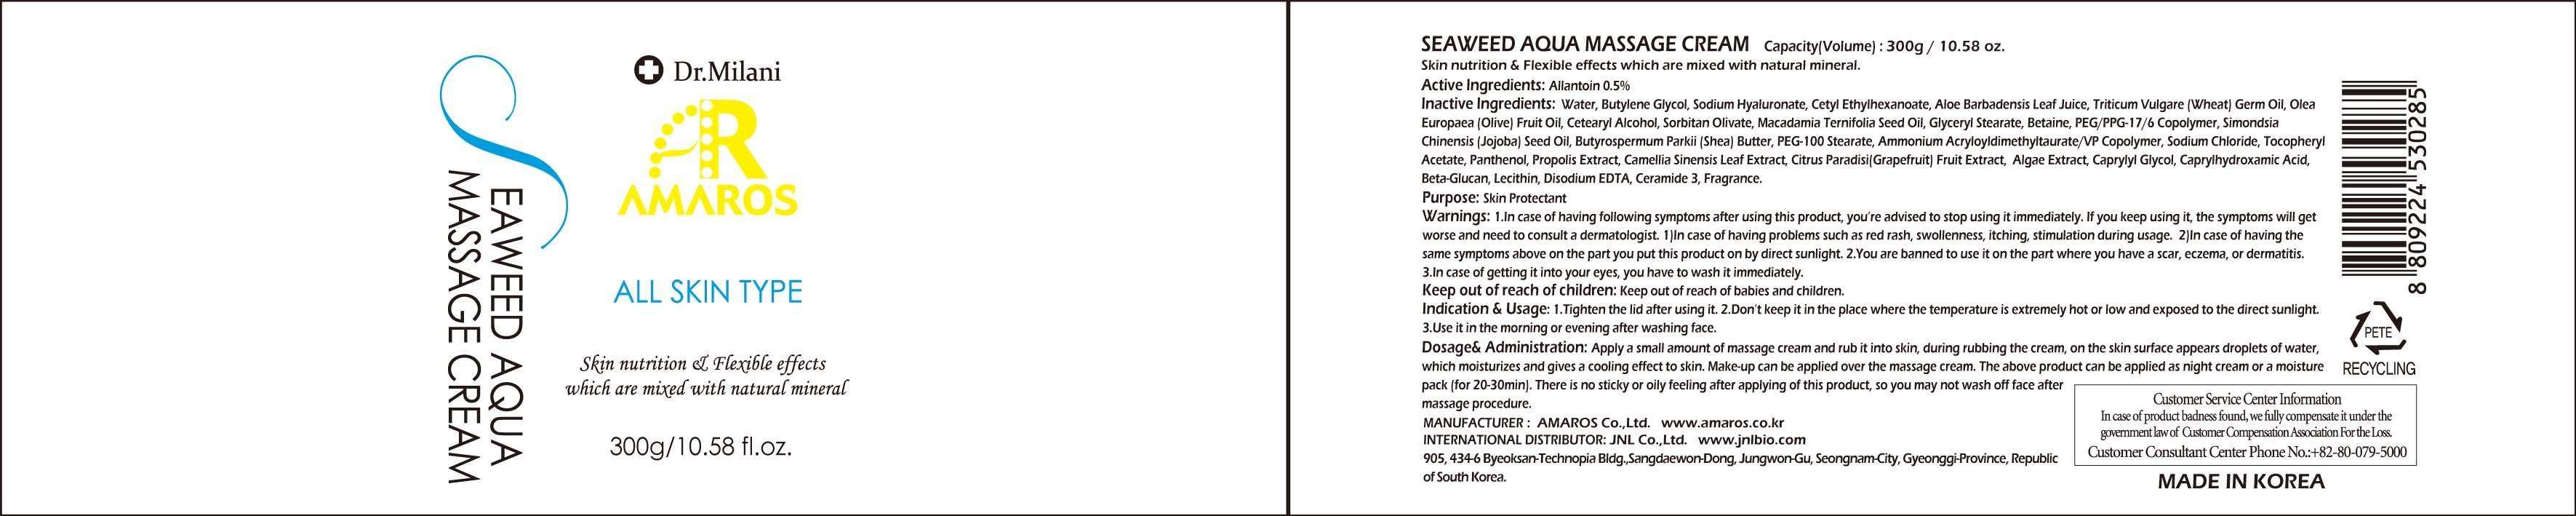 Seaweed Aqua Massage